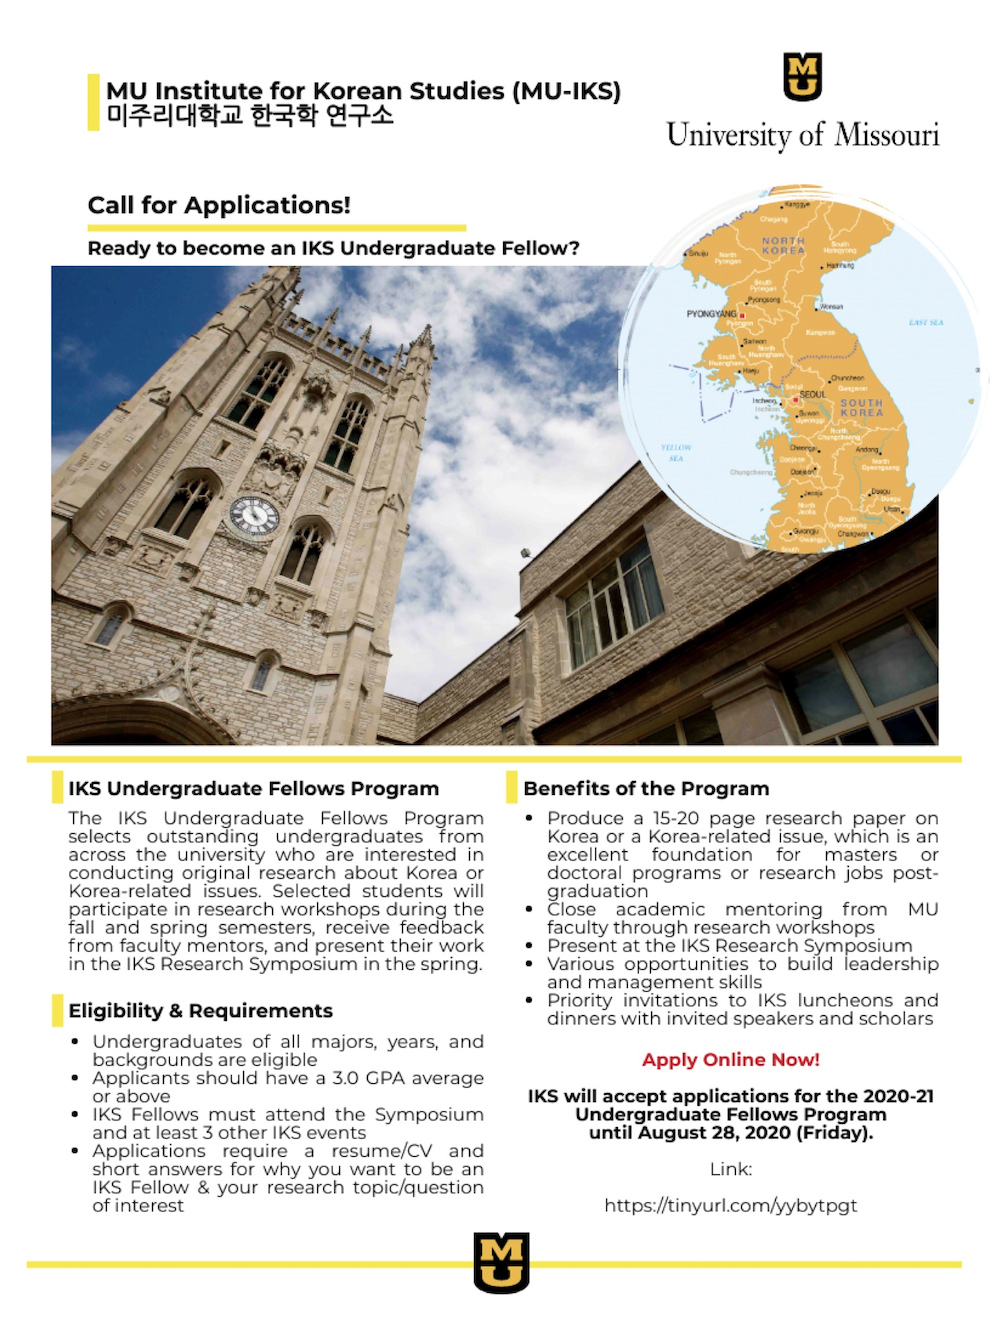 Apply to be an IKS Undergraduate Fellow!